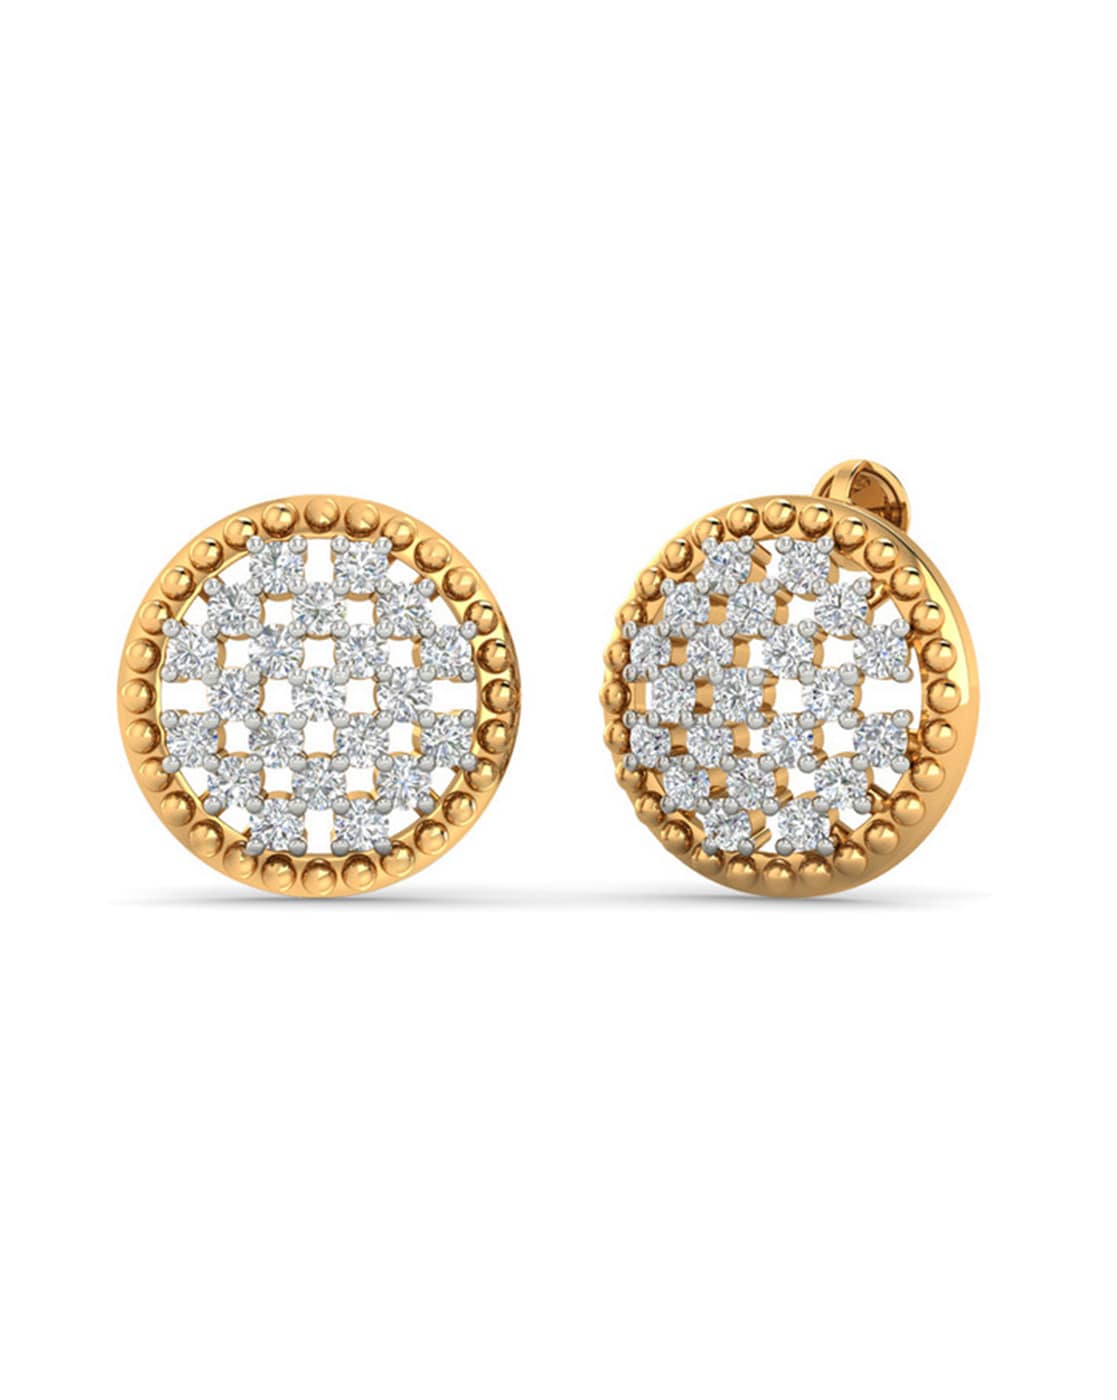 Buy Yellow Gold Earrings for Women by Virinda Online | Ajio.com